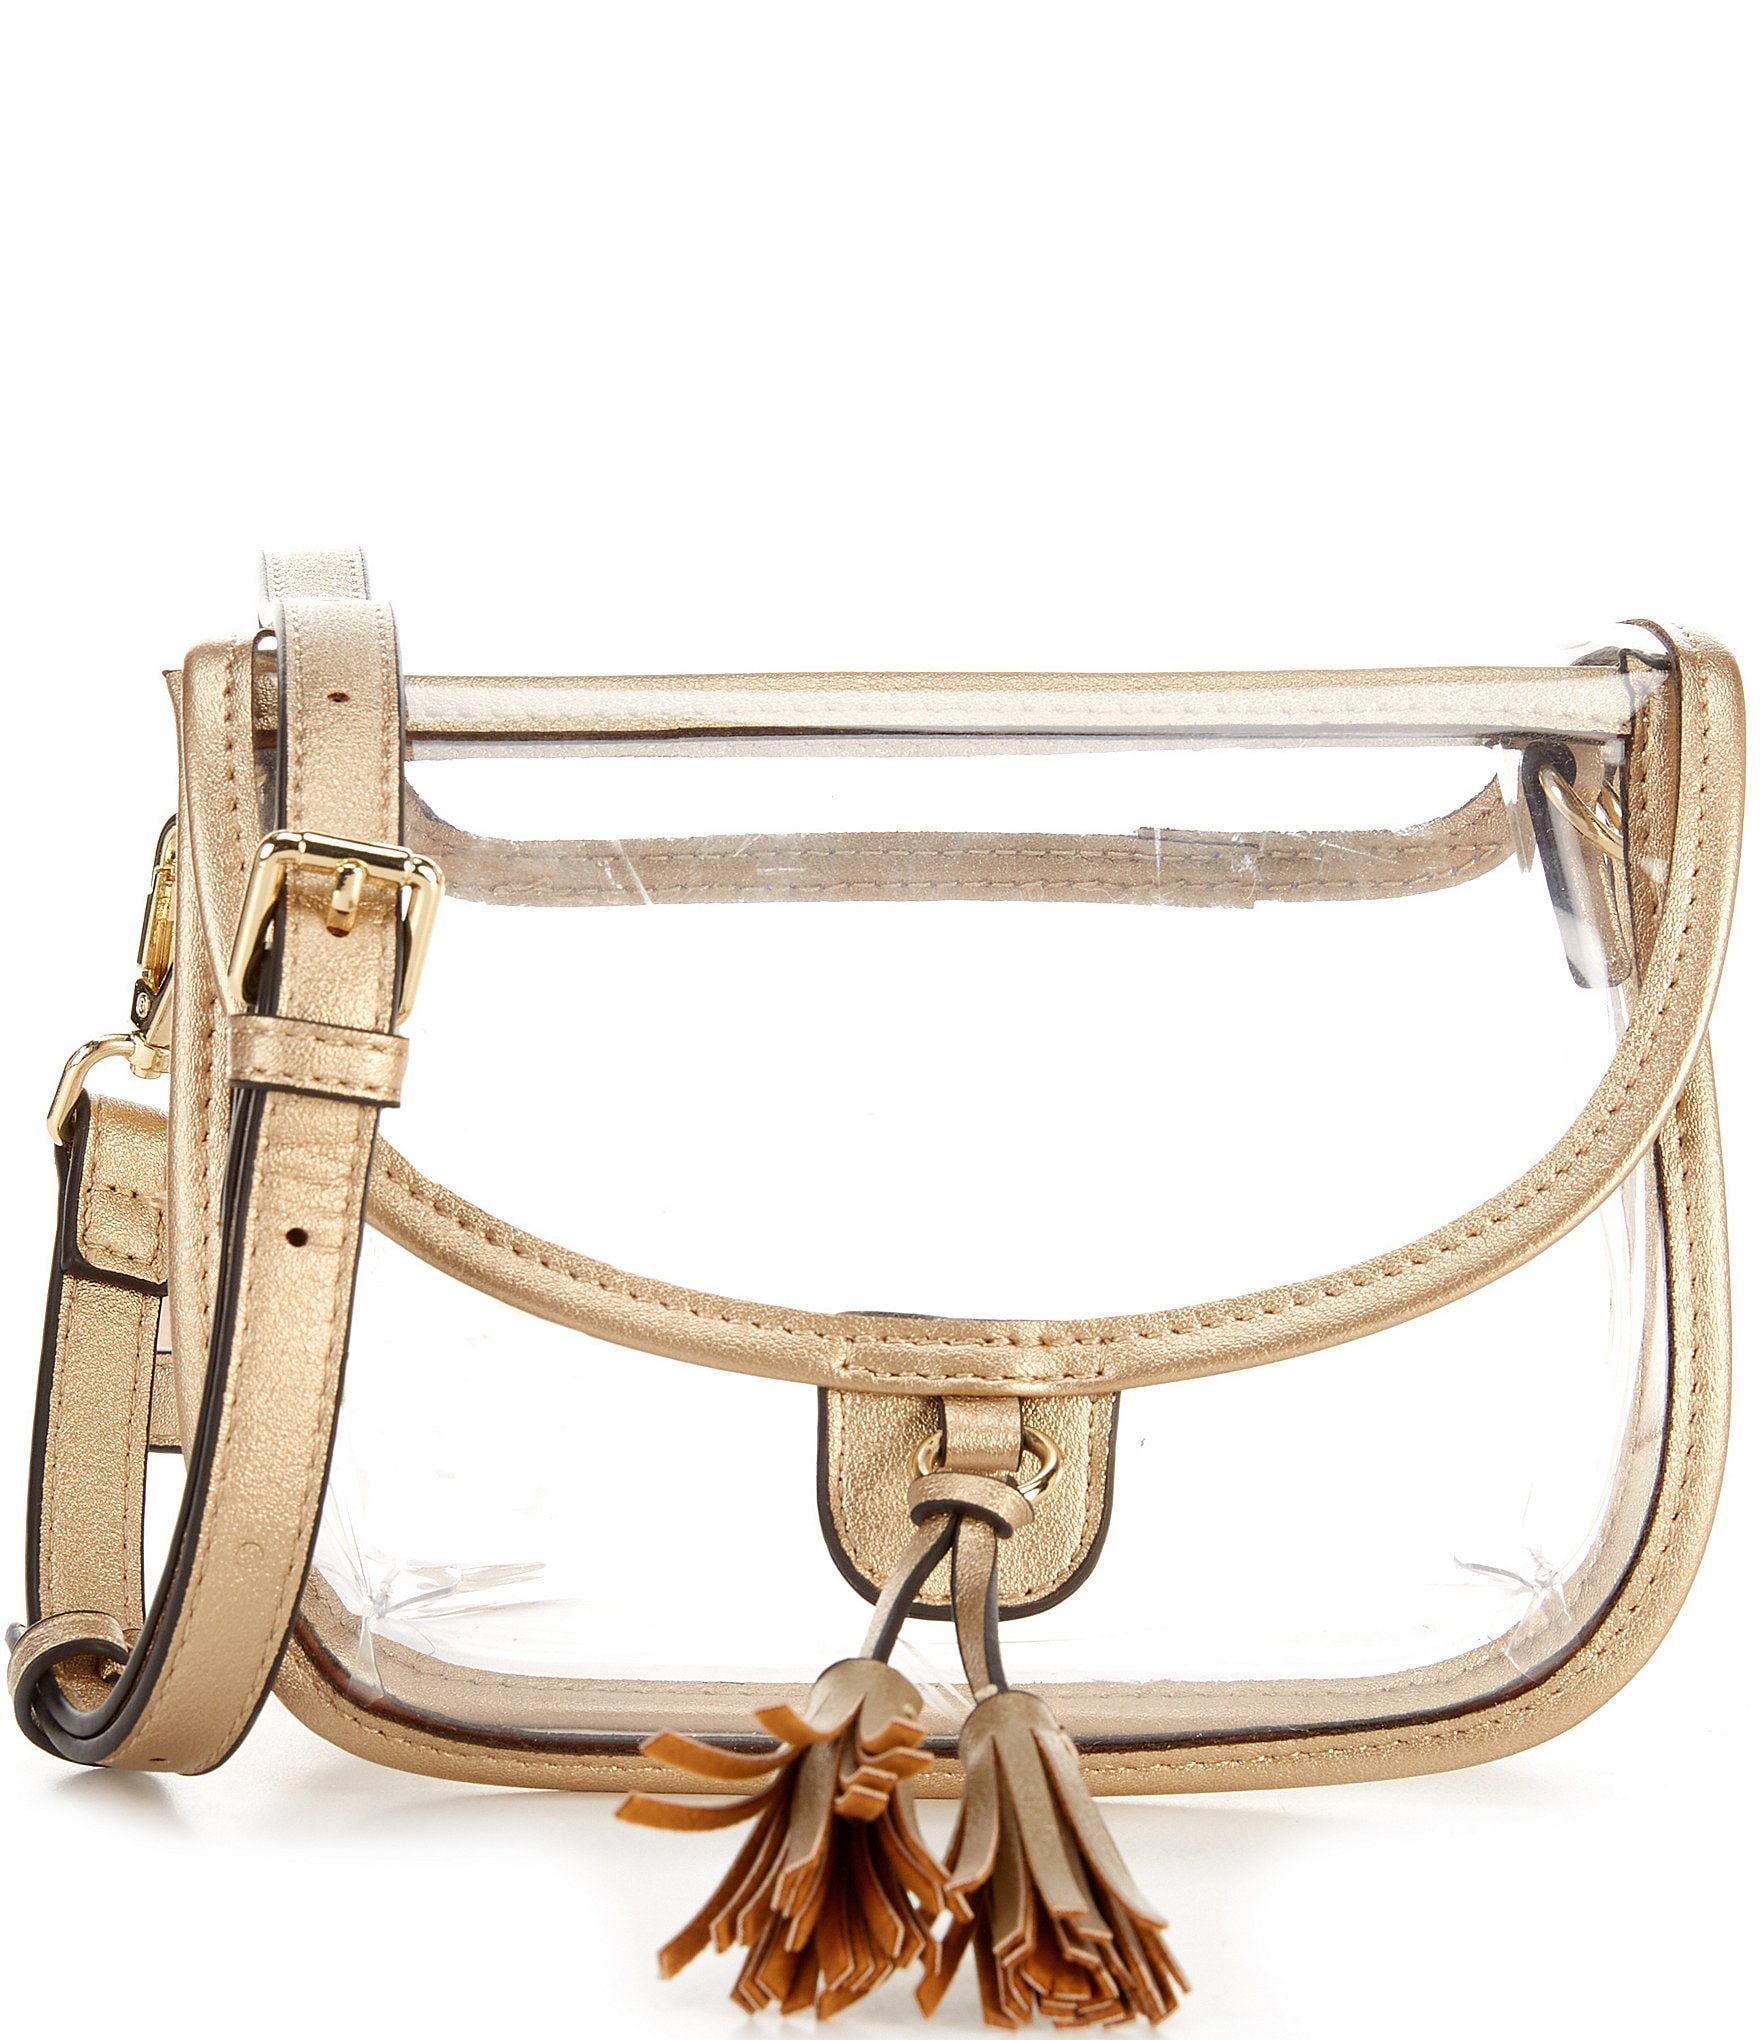 Dillards Women's Leather Exterior Bags & Handbags for sale | eBay